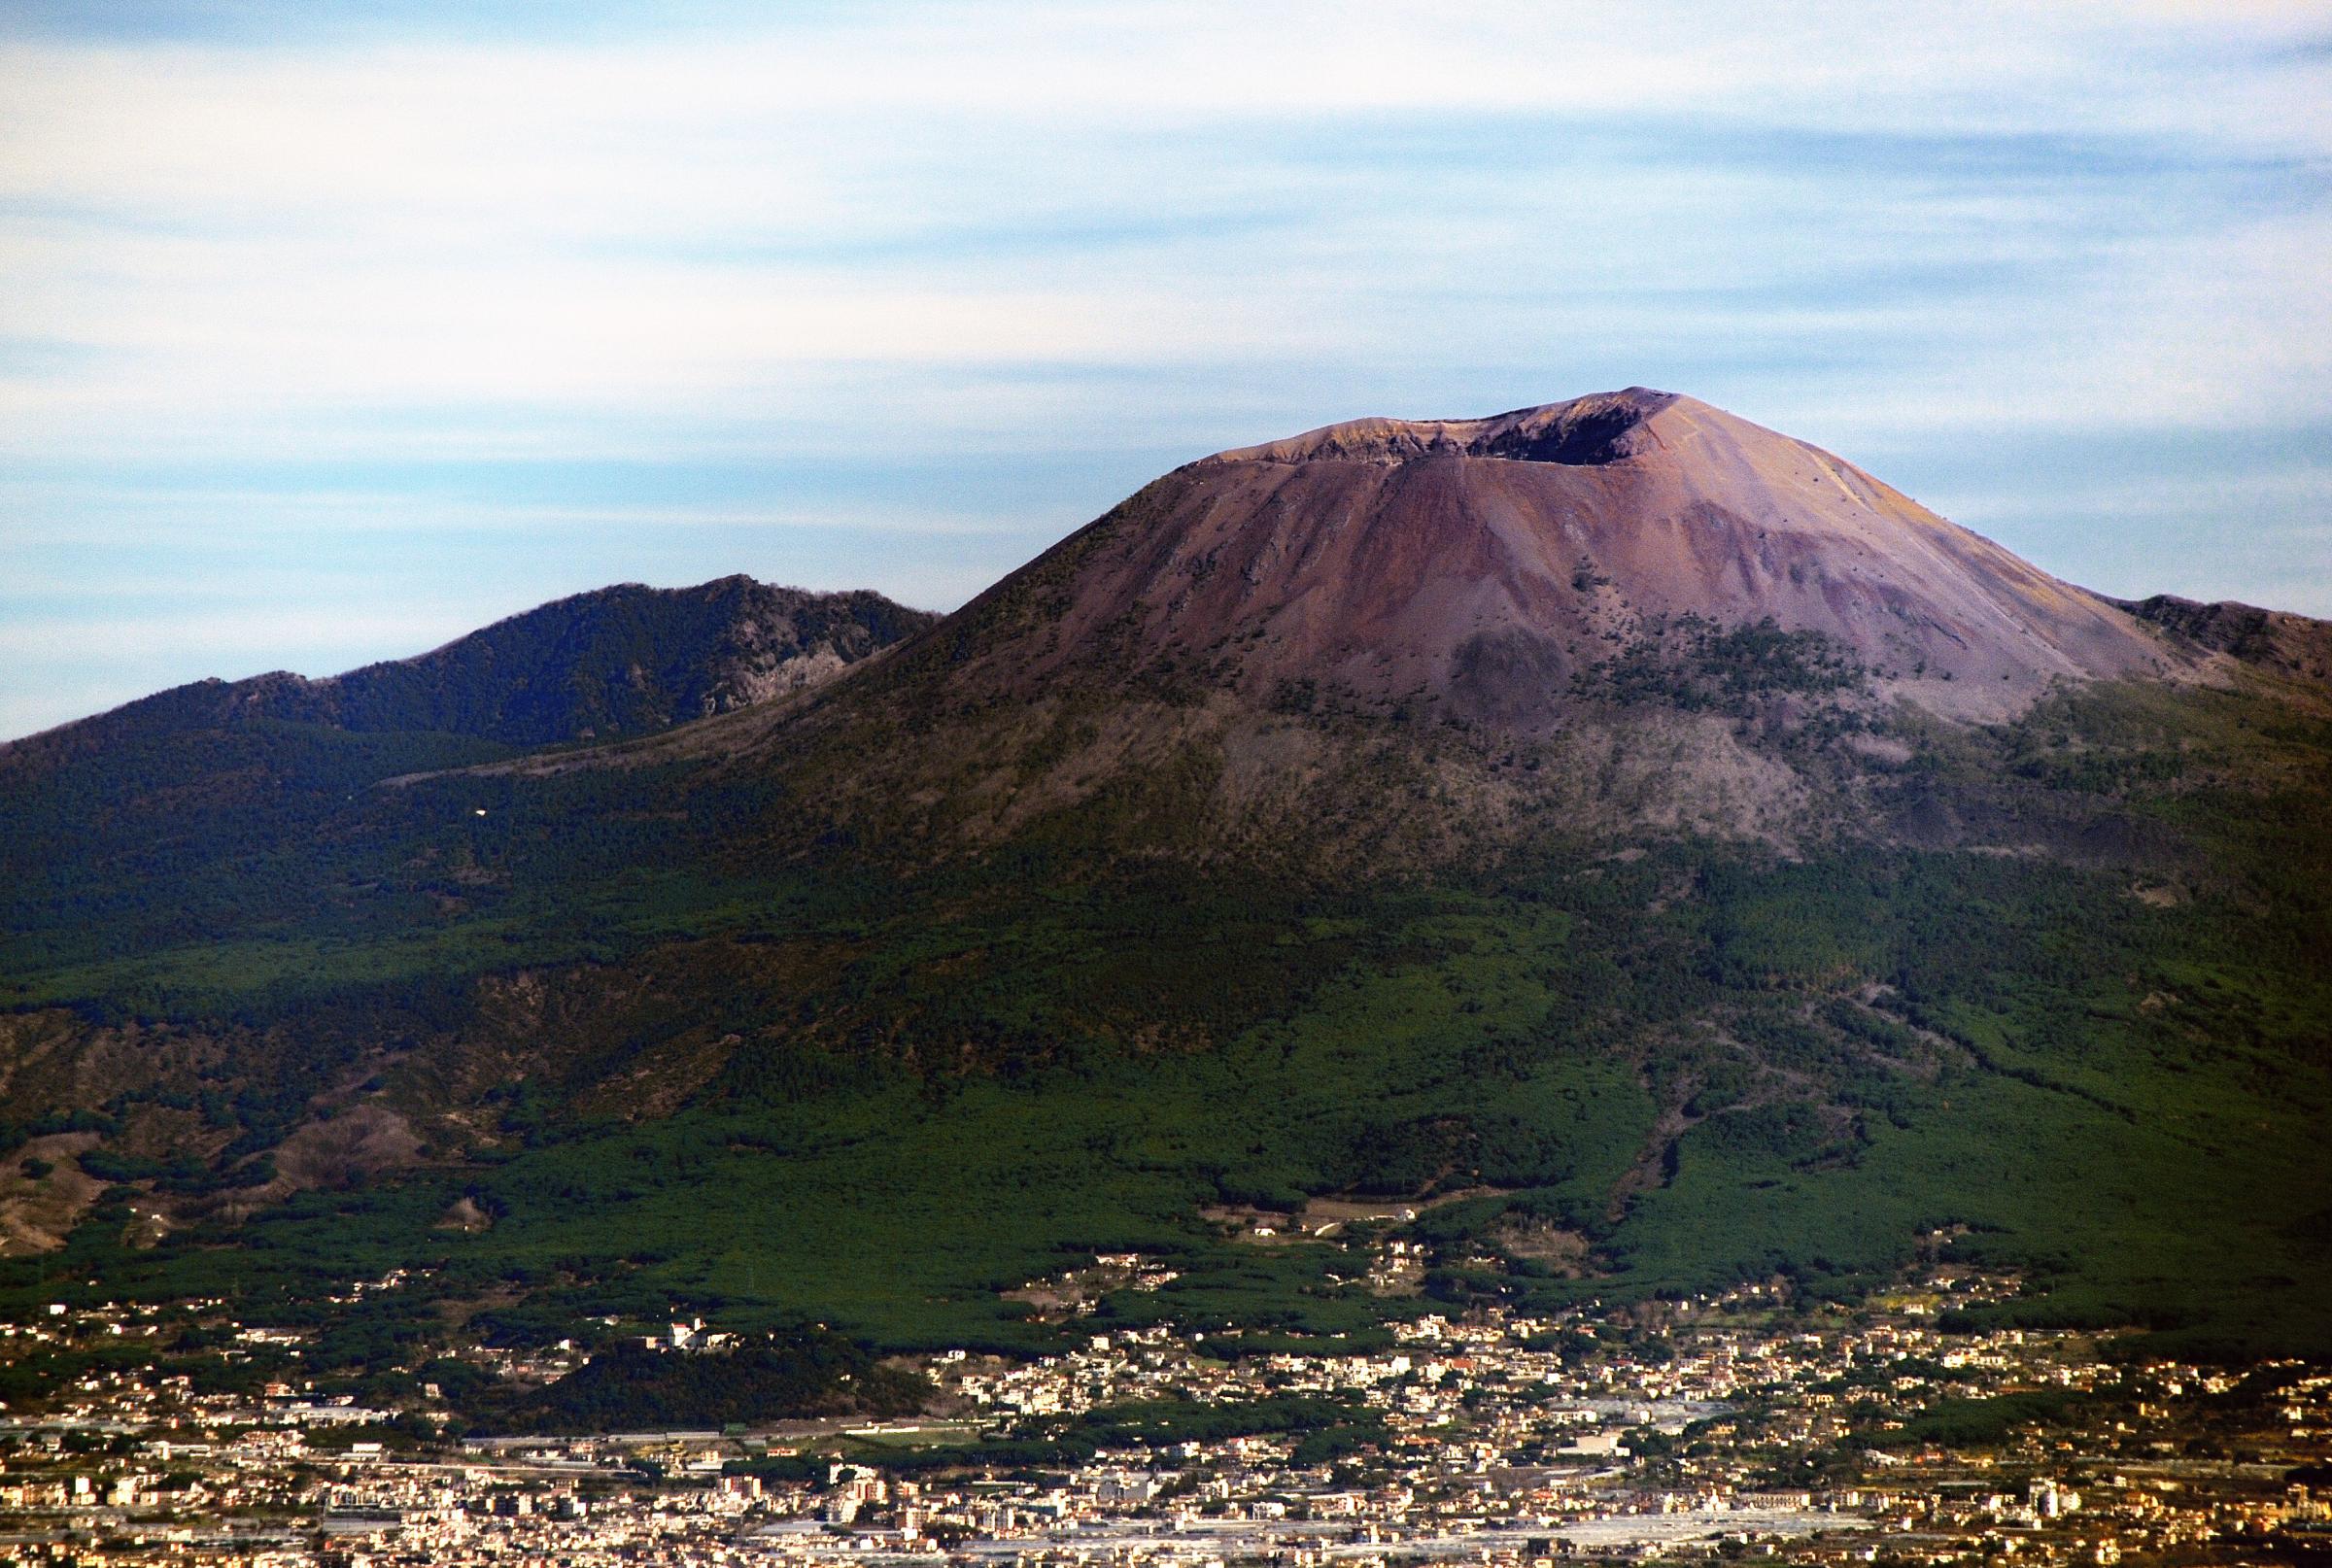 Mt. Vesuvius as seen from Sorrento